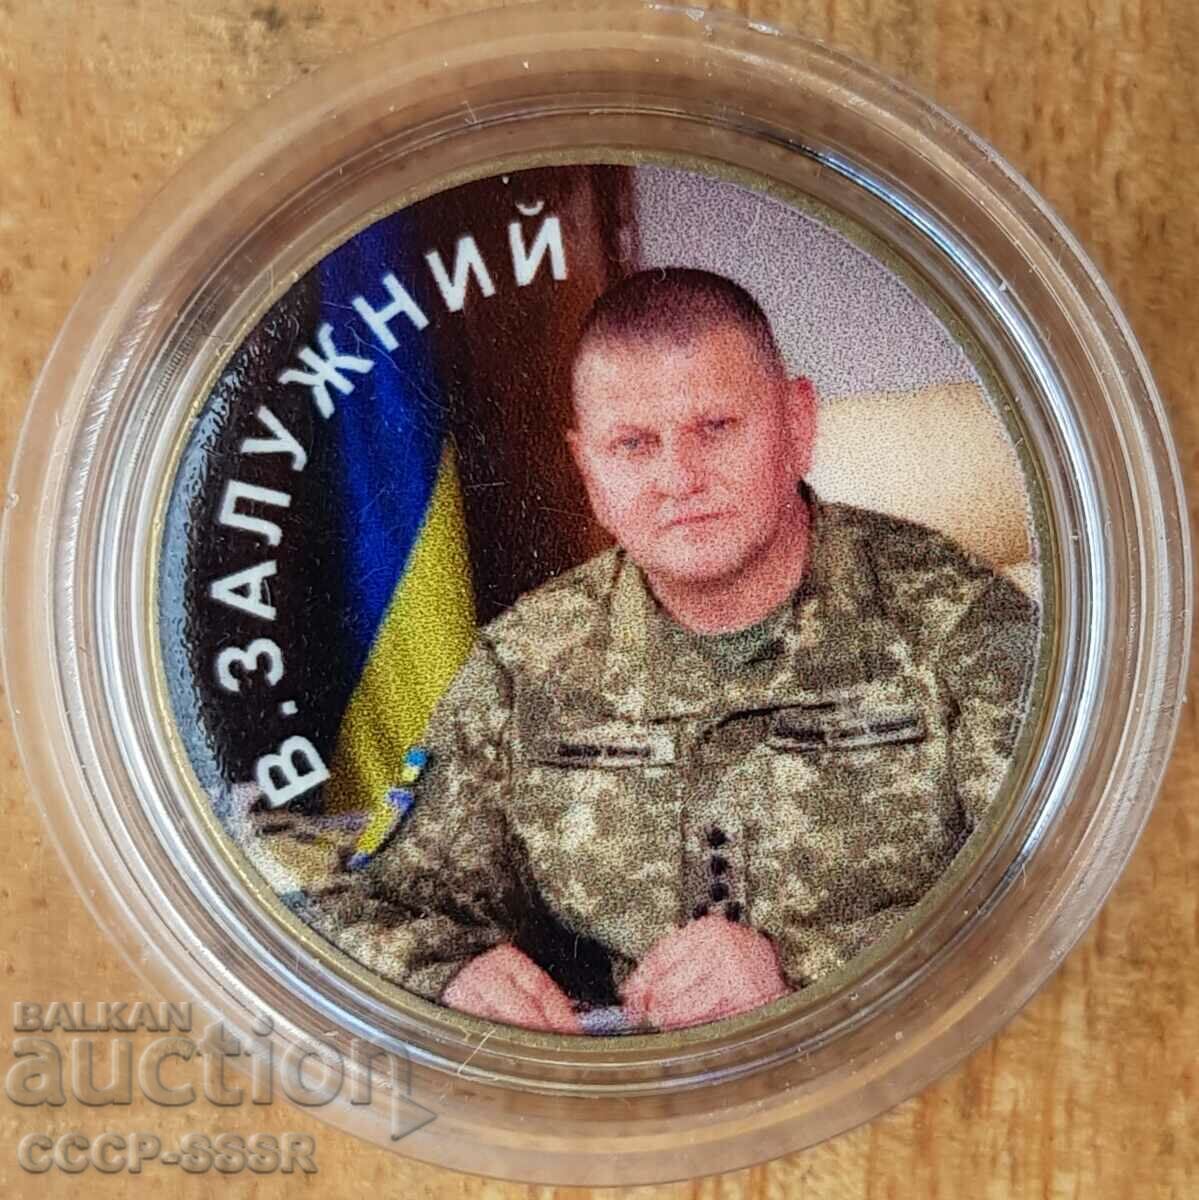 Ucraina 1 mane, Zaluzhny V.F. Glavcom al Forțelor Armate ale Ucrainei, emisiune limitată